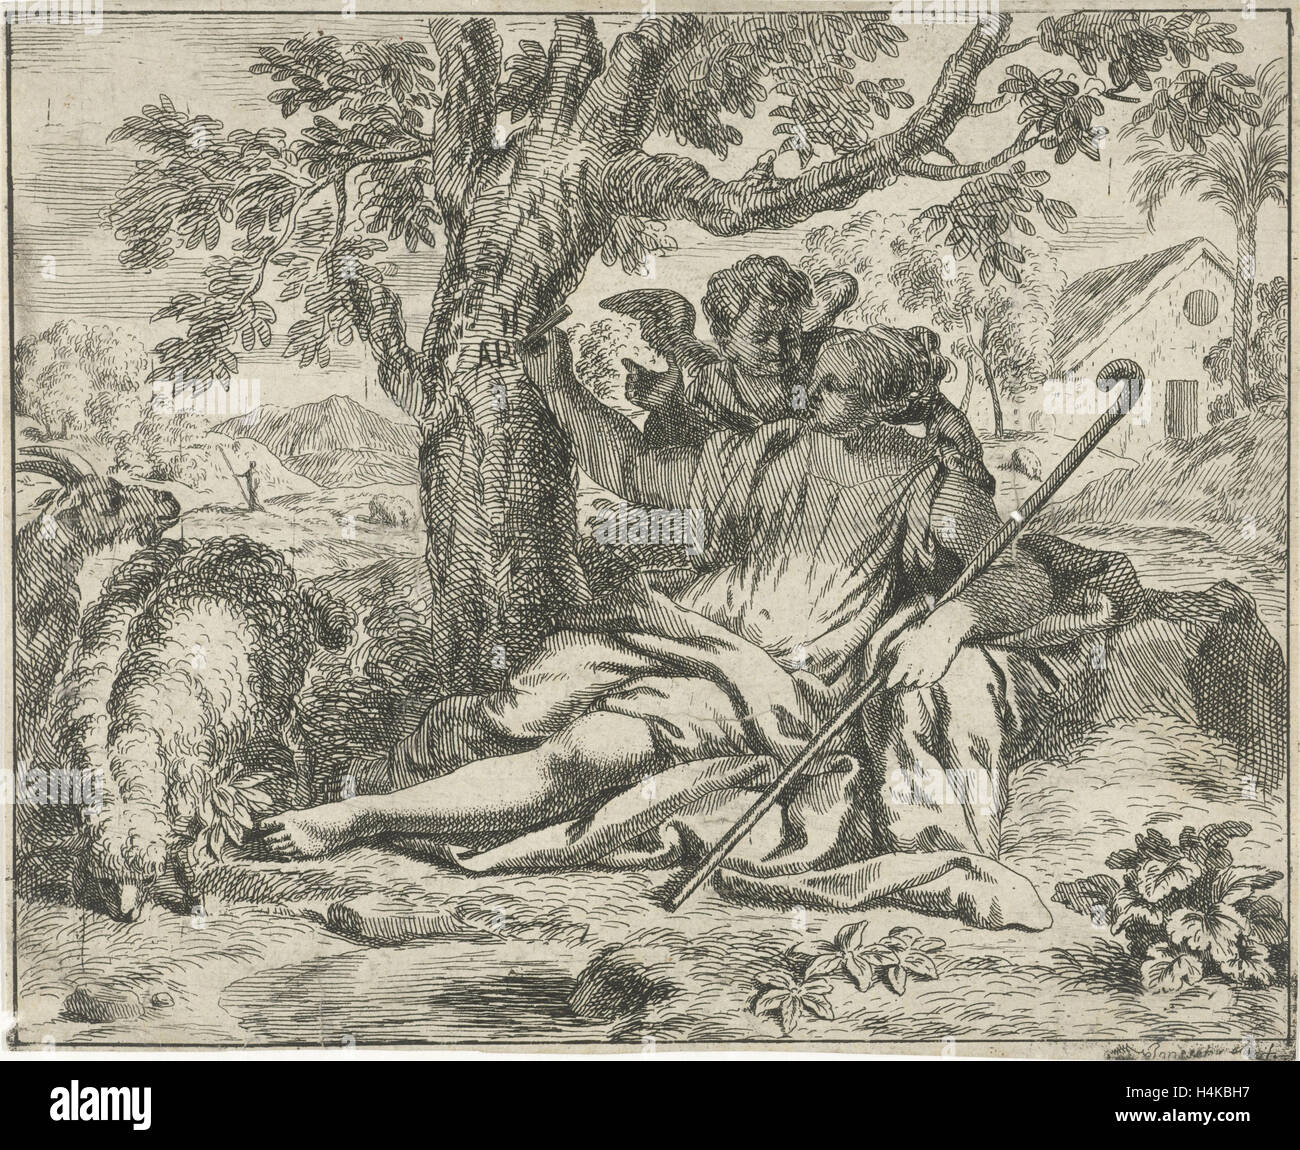 angel appears to Hagar, J. Alexander Janssens, c. 1700 Stock Photo - Alamy